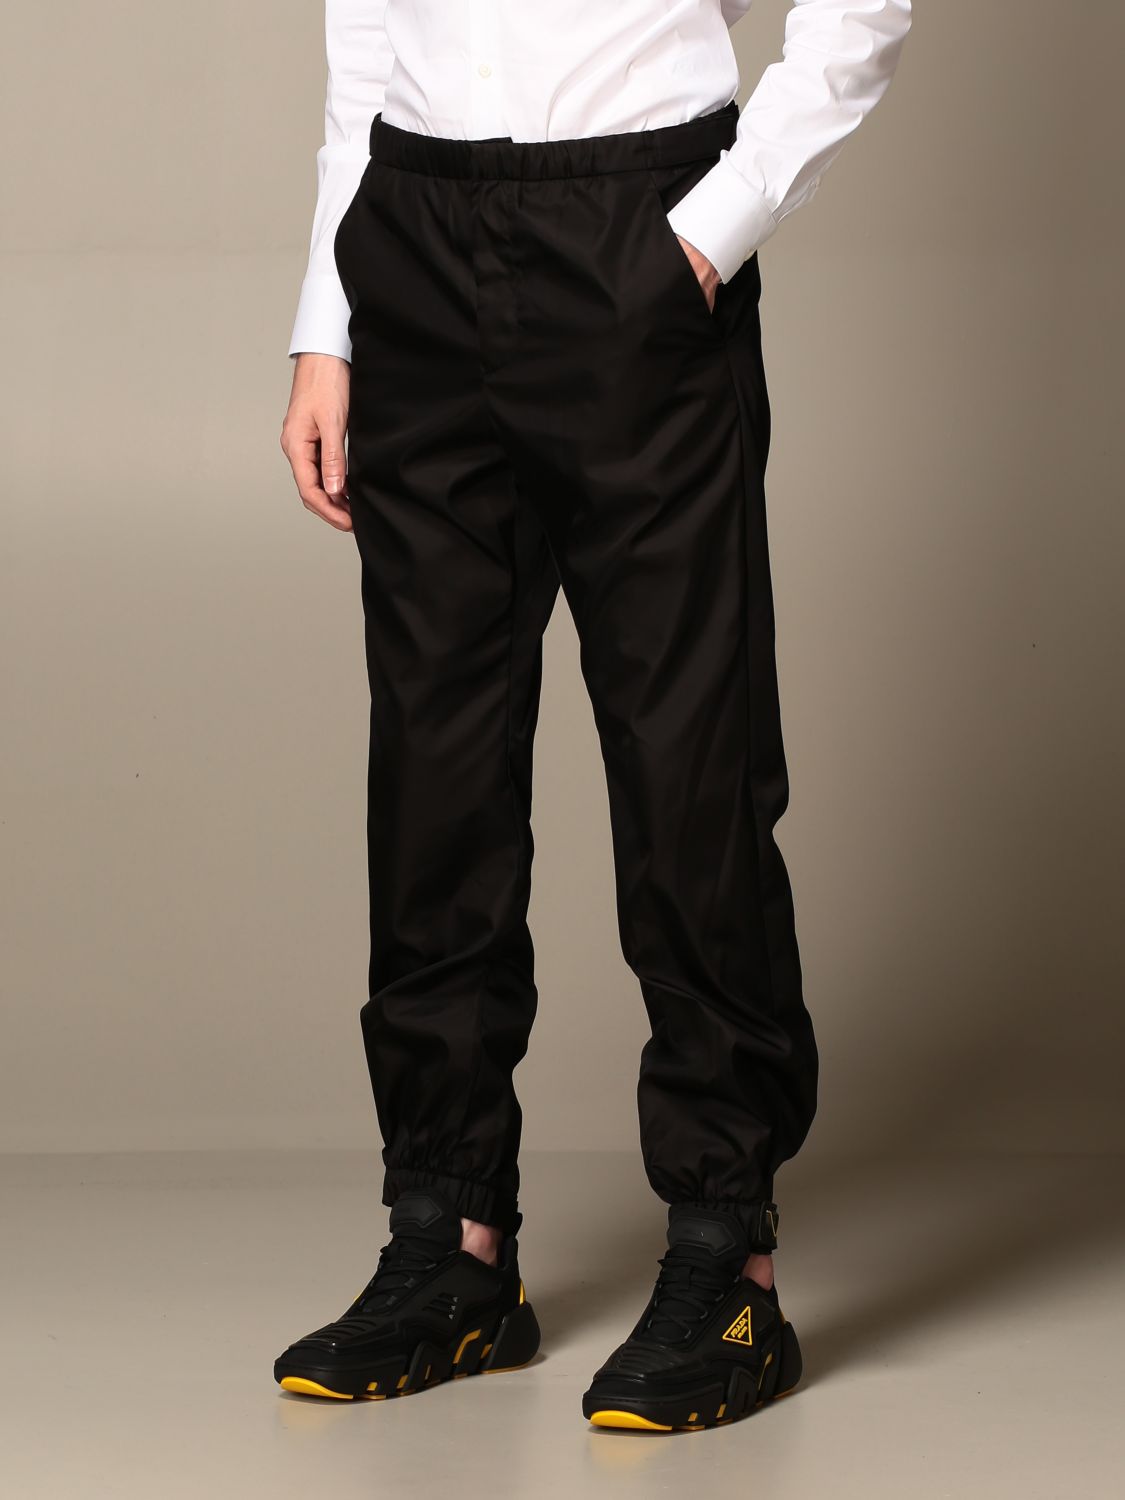 PRADA: nylon trousers with tear tabs | Pants Prada Men Black | Pants ...